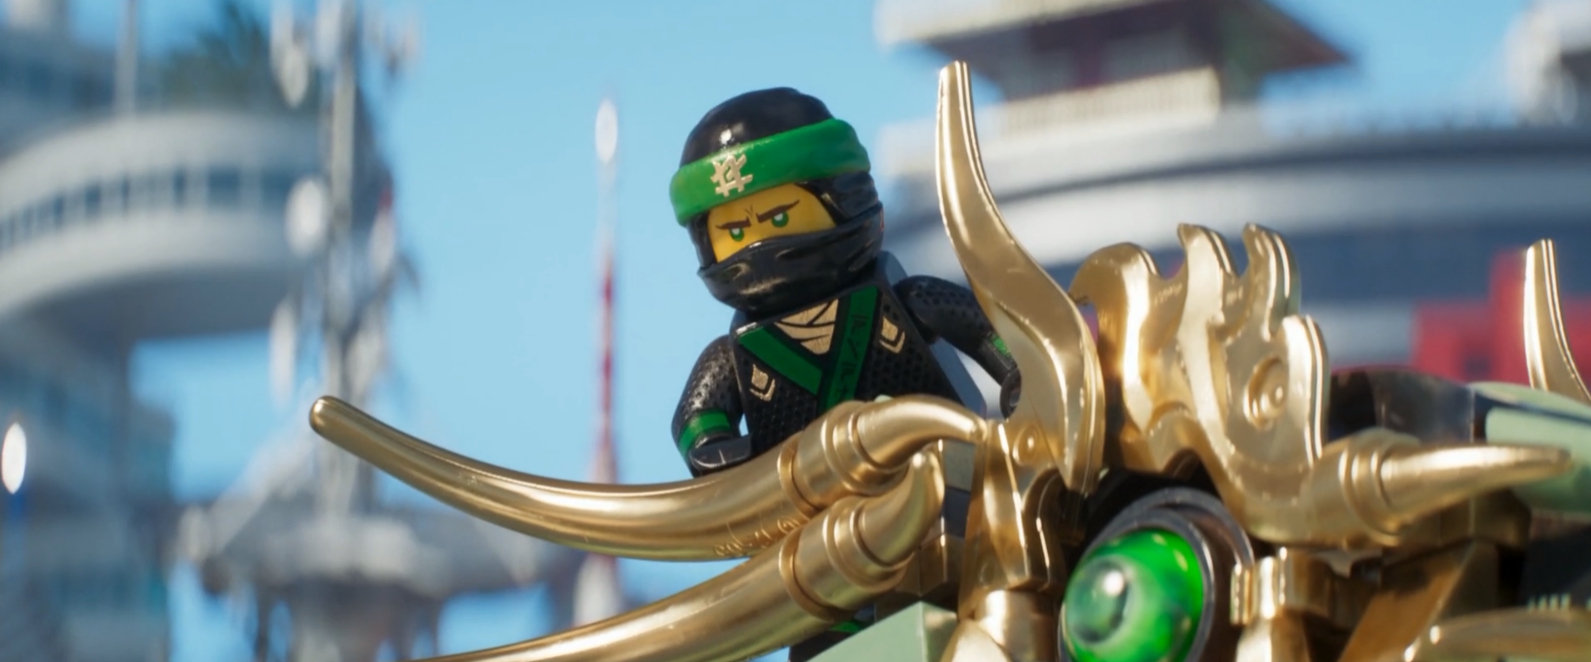 The Lego Ninjago Movie Movie Review